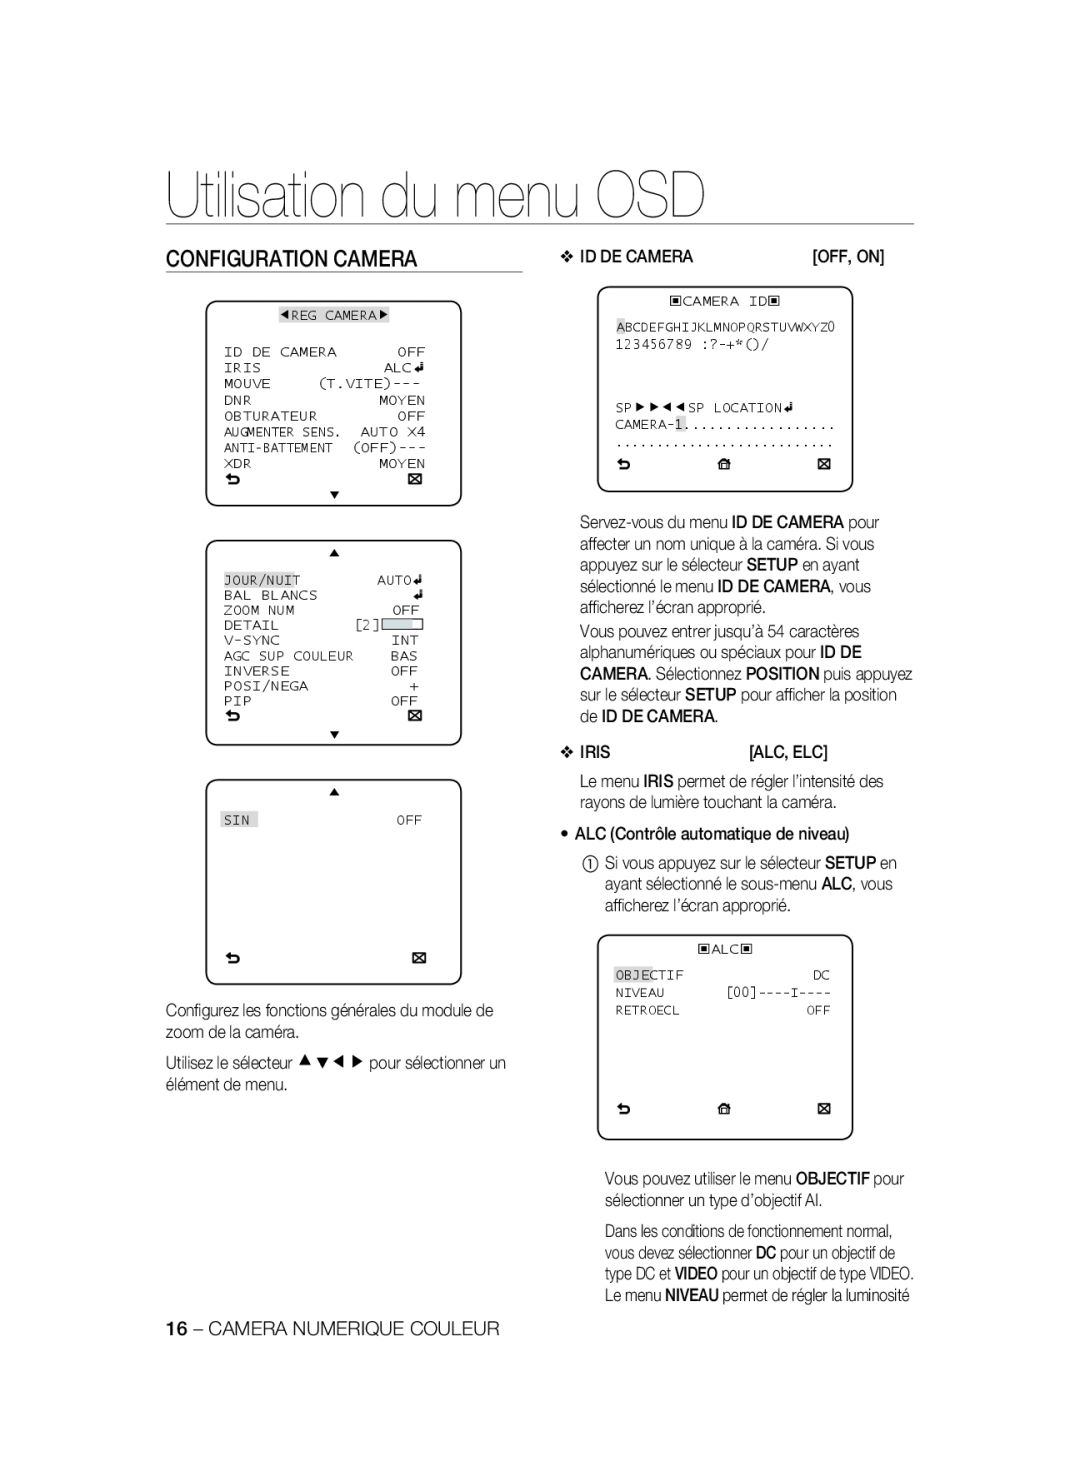 Samsung SCC-B2337P, SCC-B2037P manual Configuration Camera, Utilisation du menu OSD 